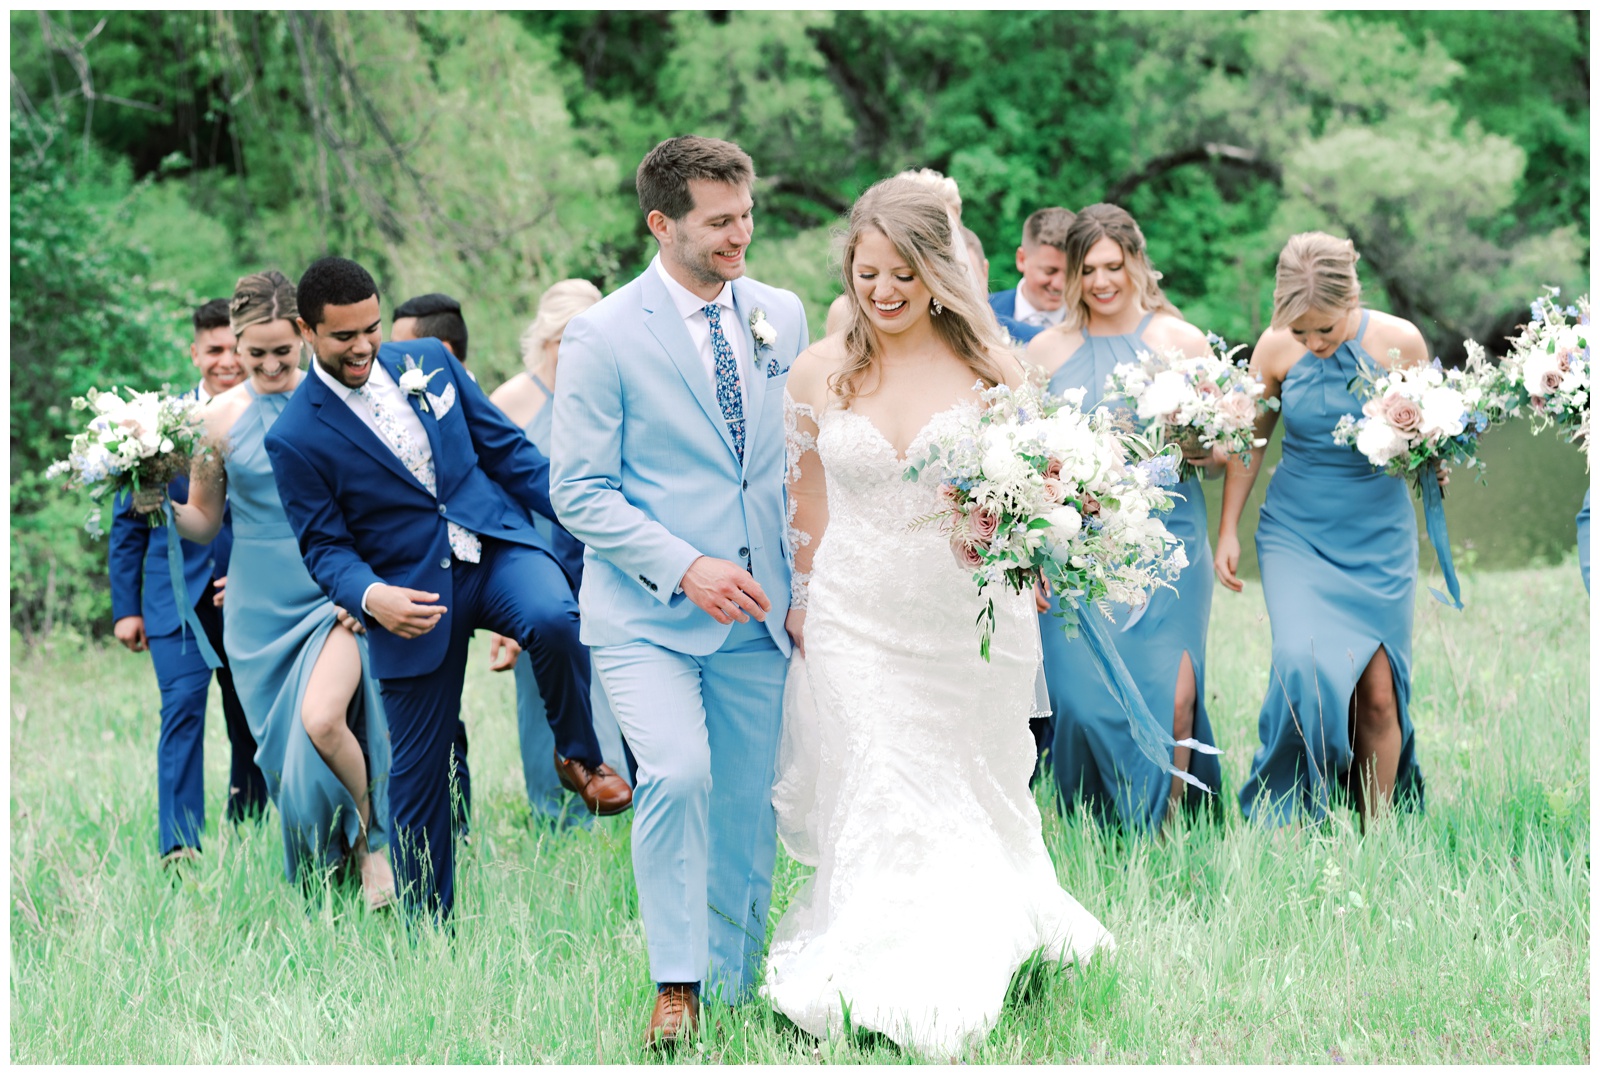 Kelsie + Jason's Stunning Wedding at The Lageret | Stoughton, Wisconsin ...